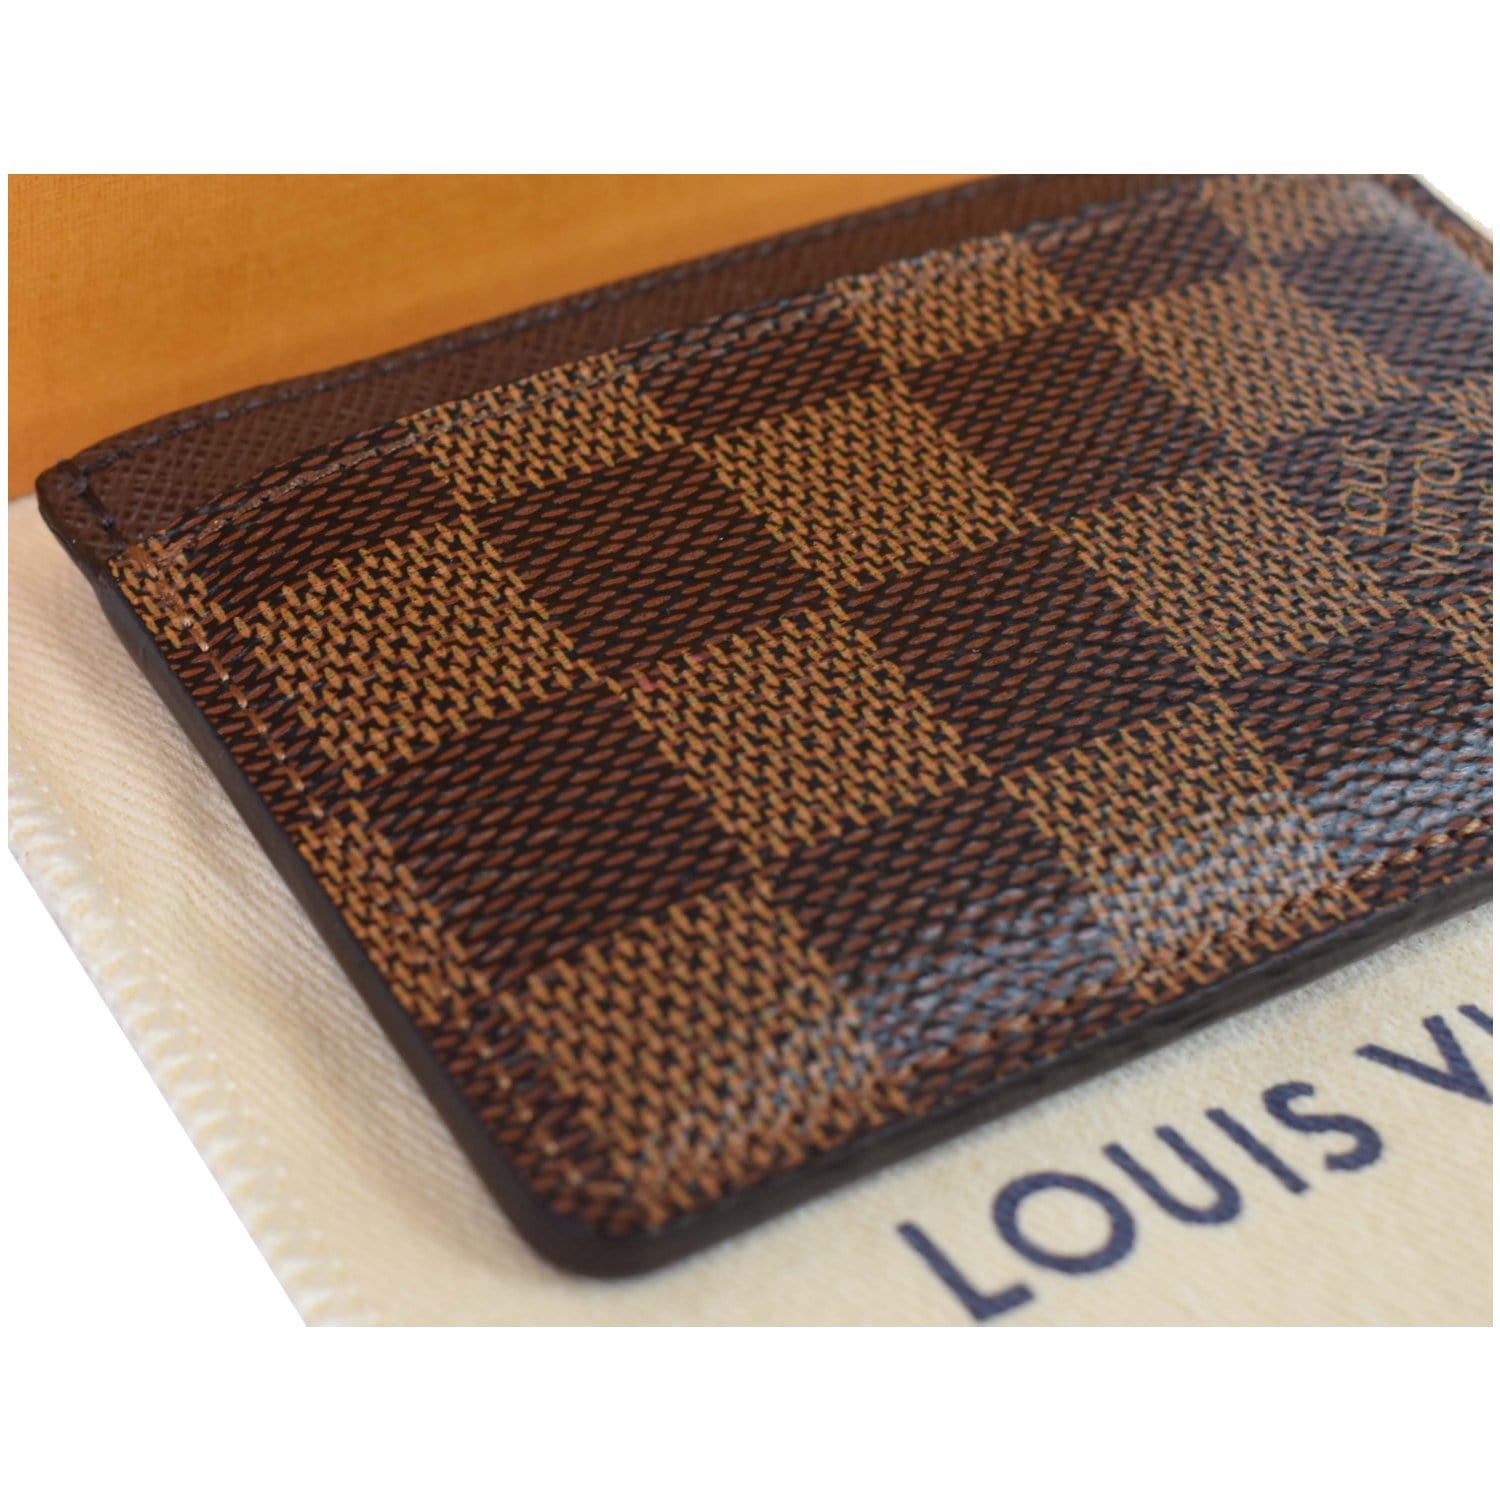 Louis Vuitton Brown ID Holder Card Wallet Insert